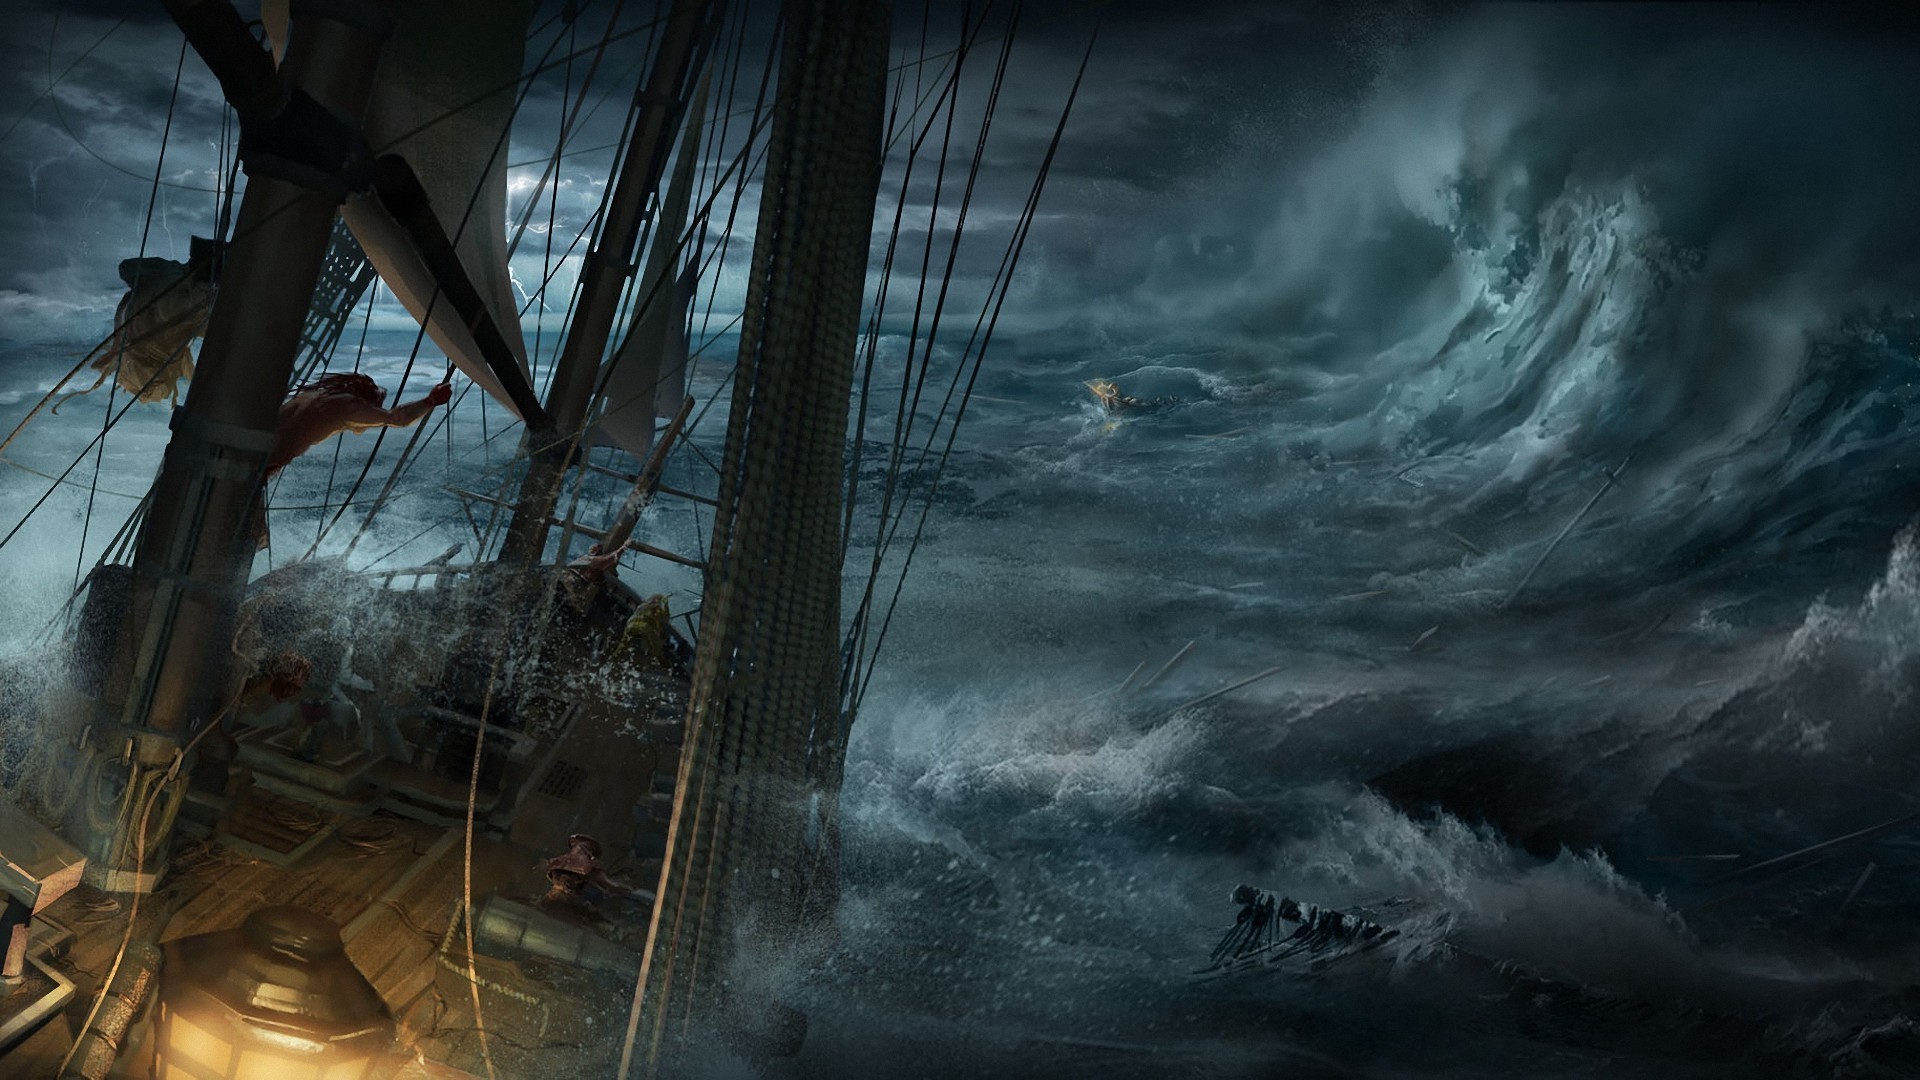 General 1920x1080 nature water sea waves digital art sailing ship storm dark clouds ropes destruction sailors Assassin's Creed III video games